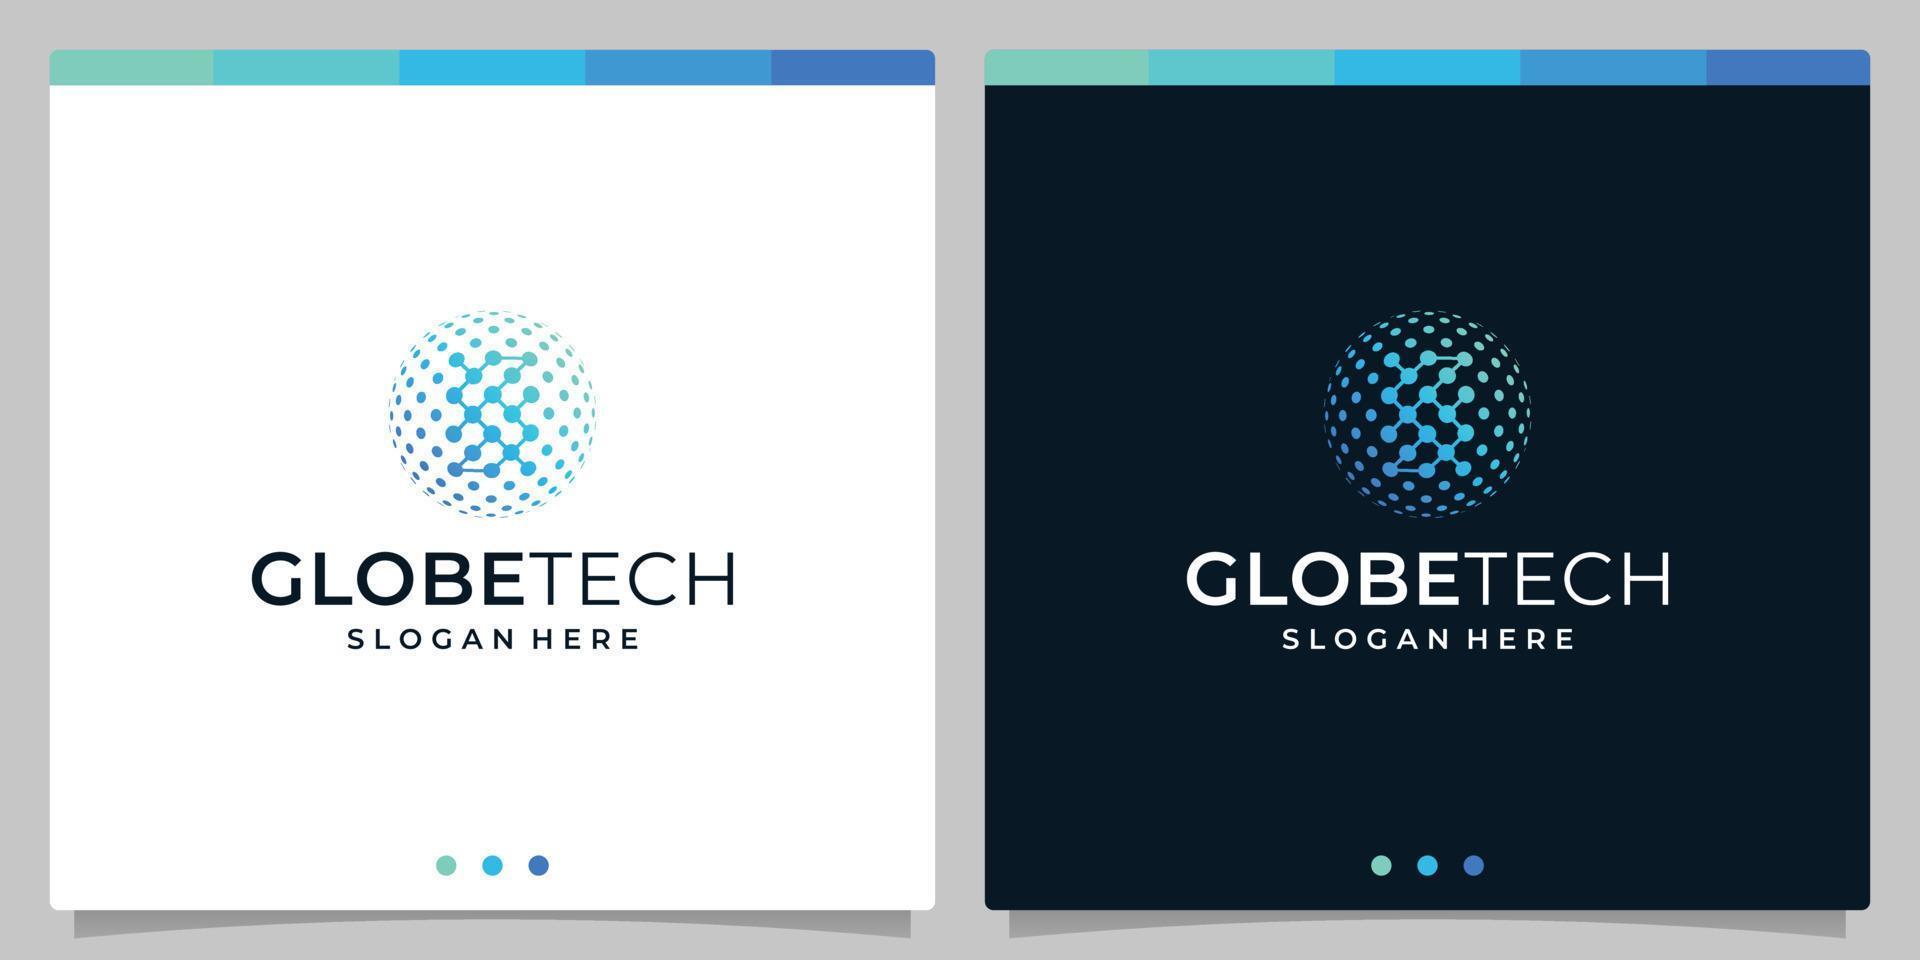 inspiration logo anfangsbuchstabe s abstrakt mit globus-tech-stil und verlaufsfarbe. Premium-Vektor vektor